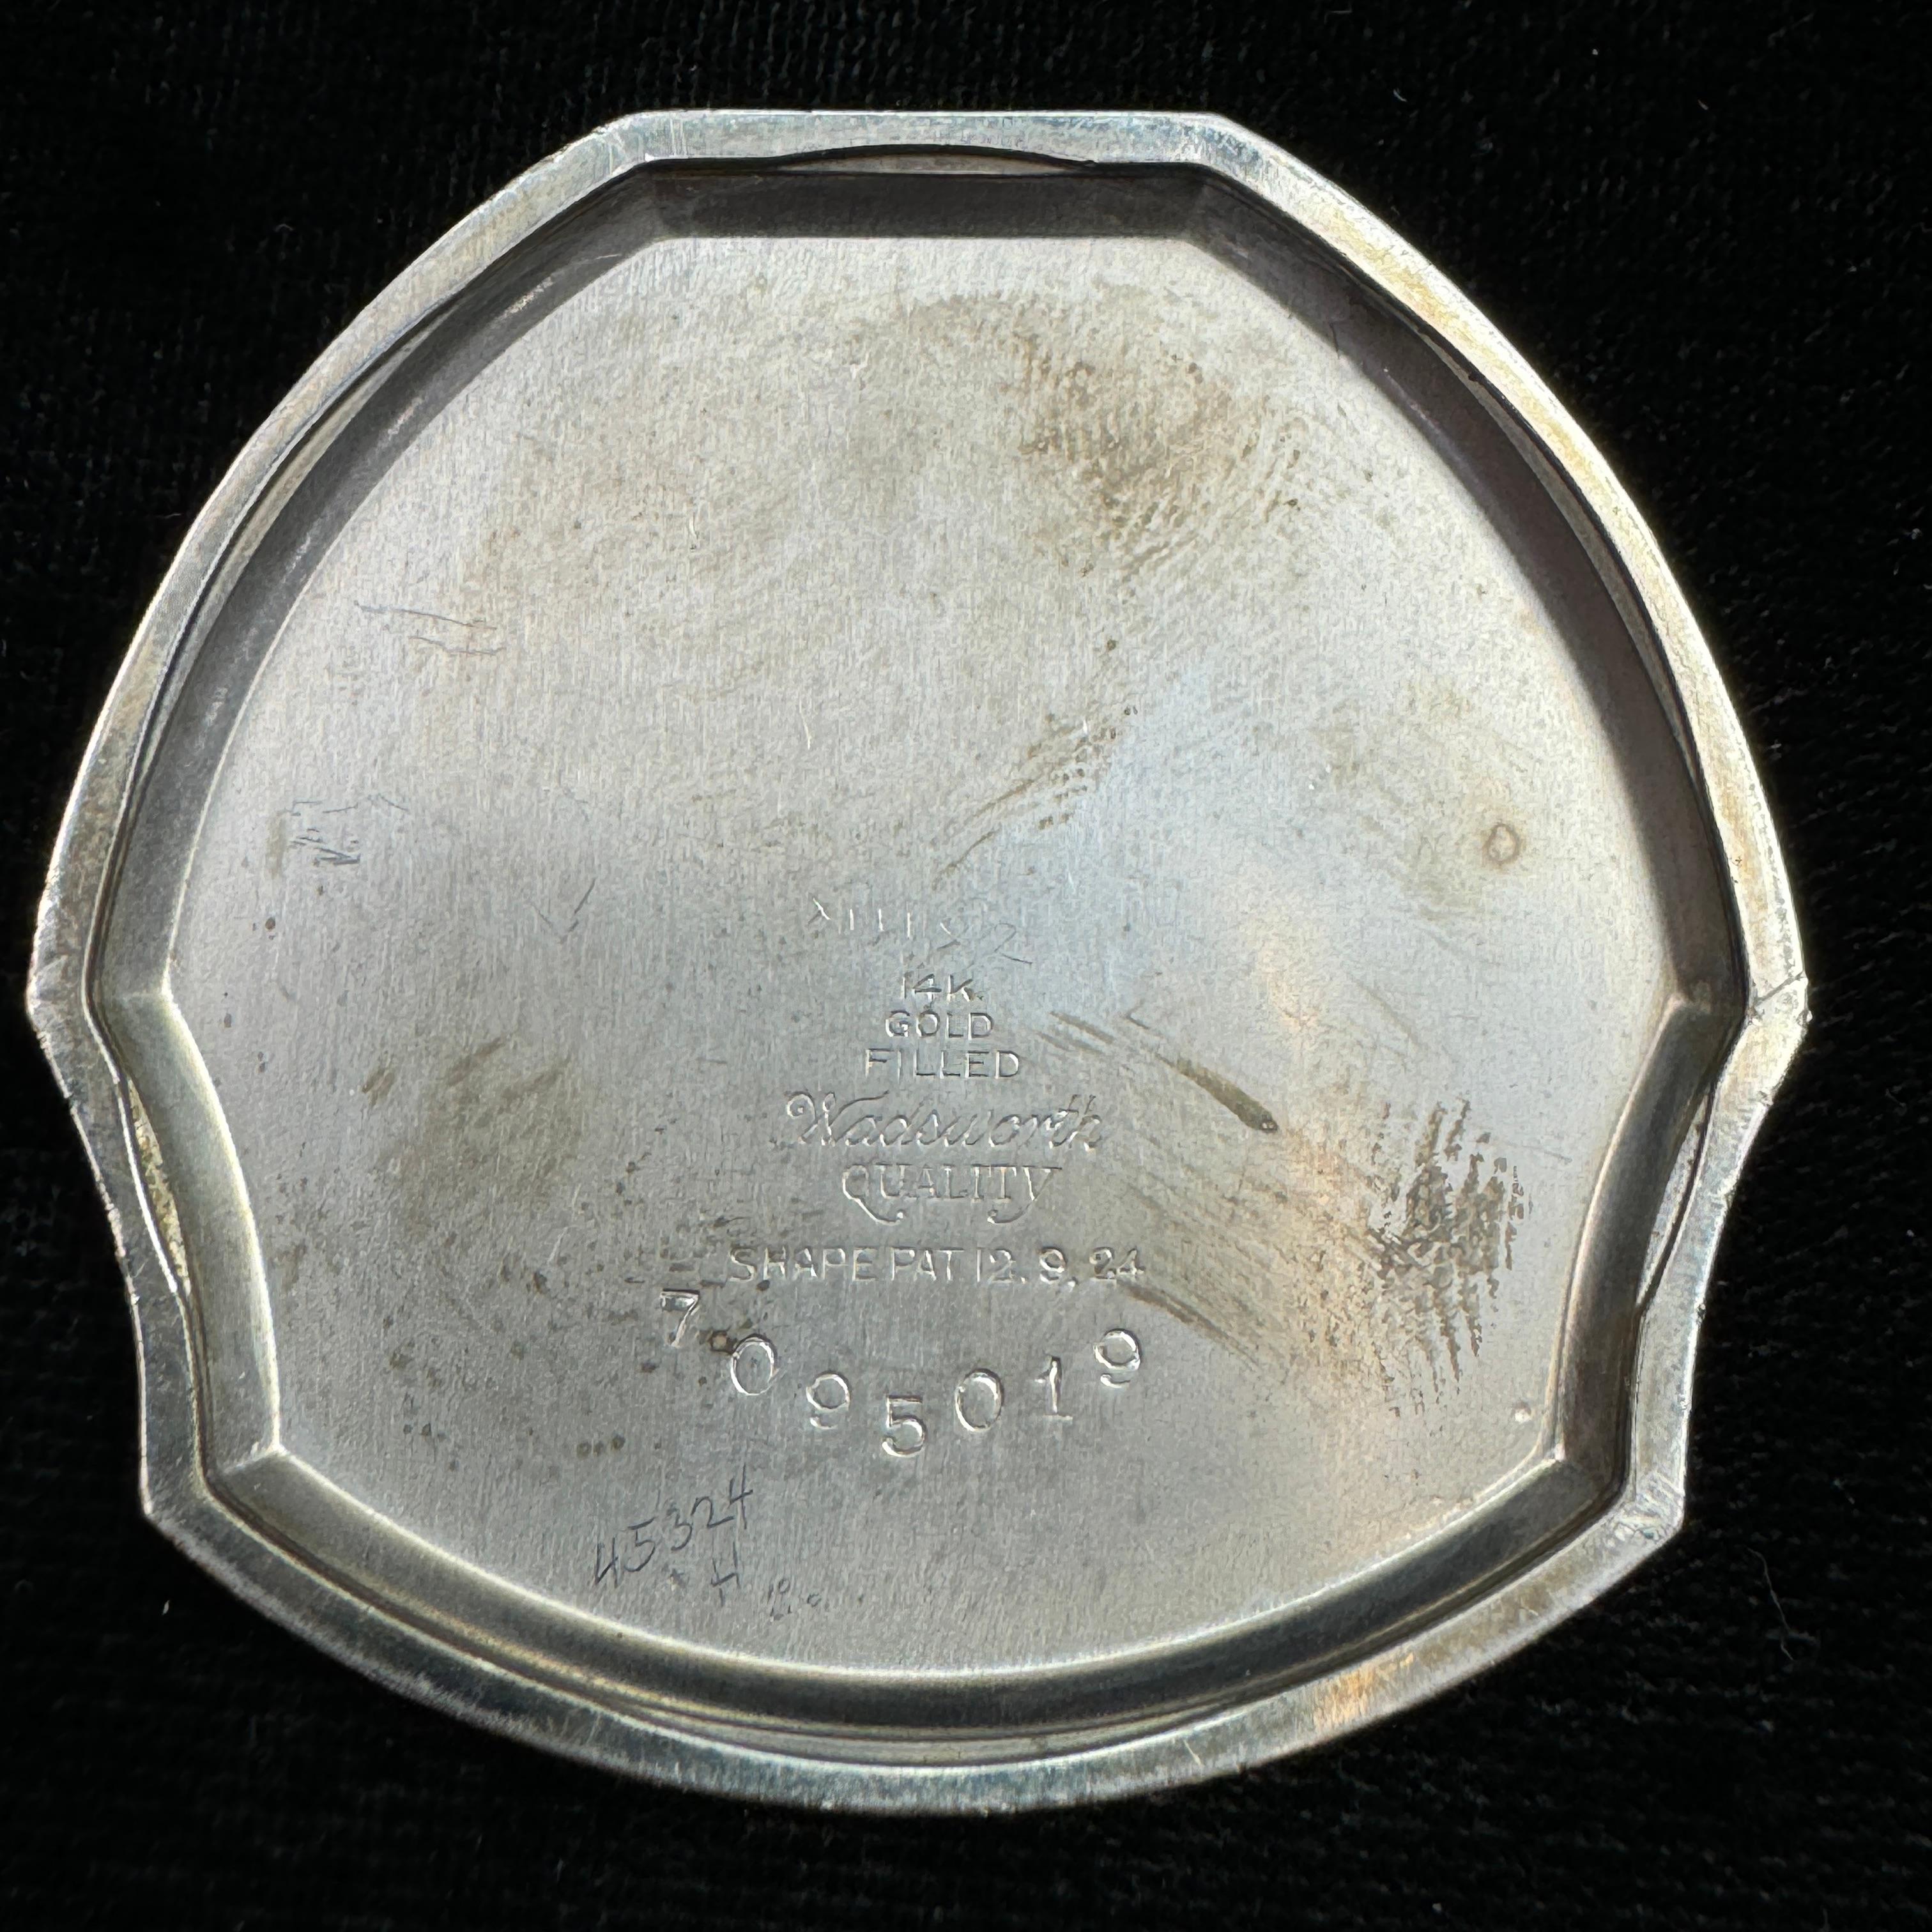 Circa 1926 15-jewel Elgin model 3 open face pocket watch